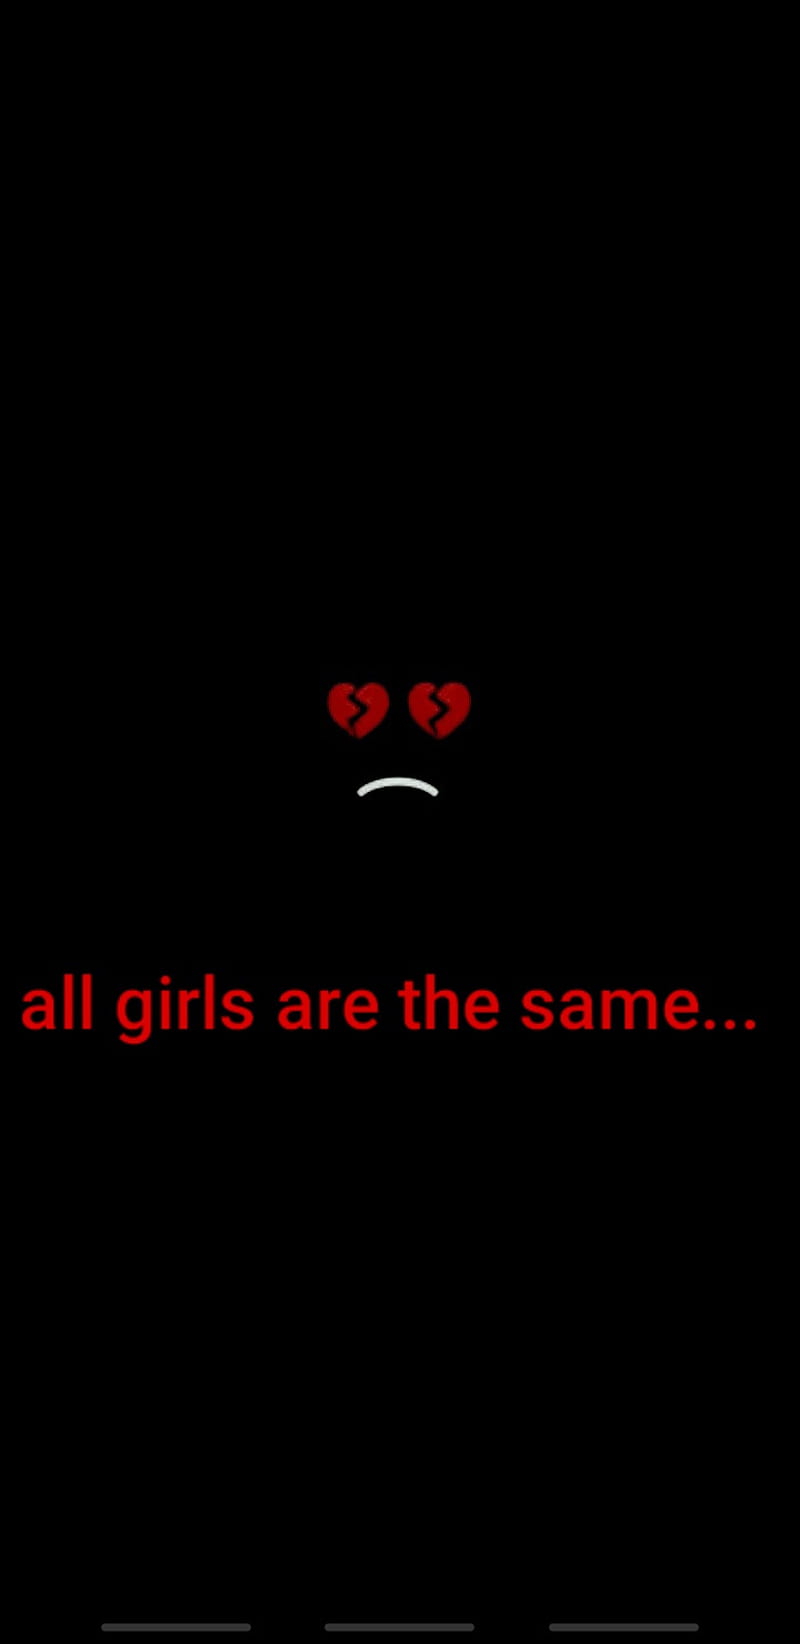 All girls are same, all girls are the same, broken, broken heart, dark, empty, sad, HD phone wallpaper